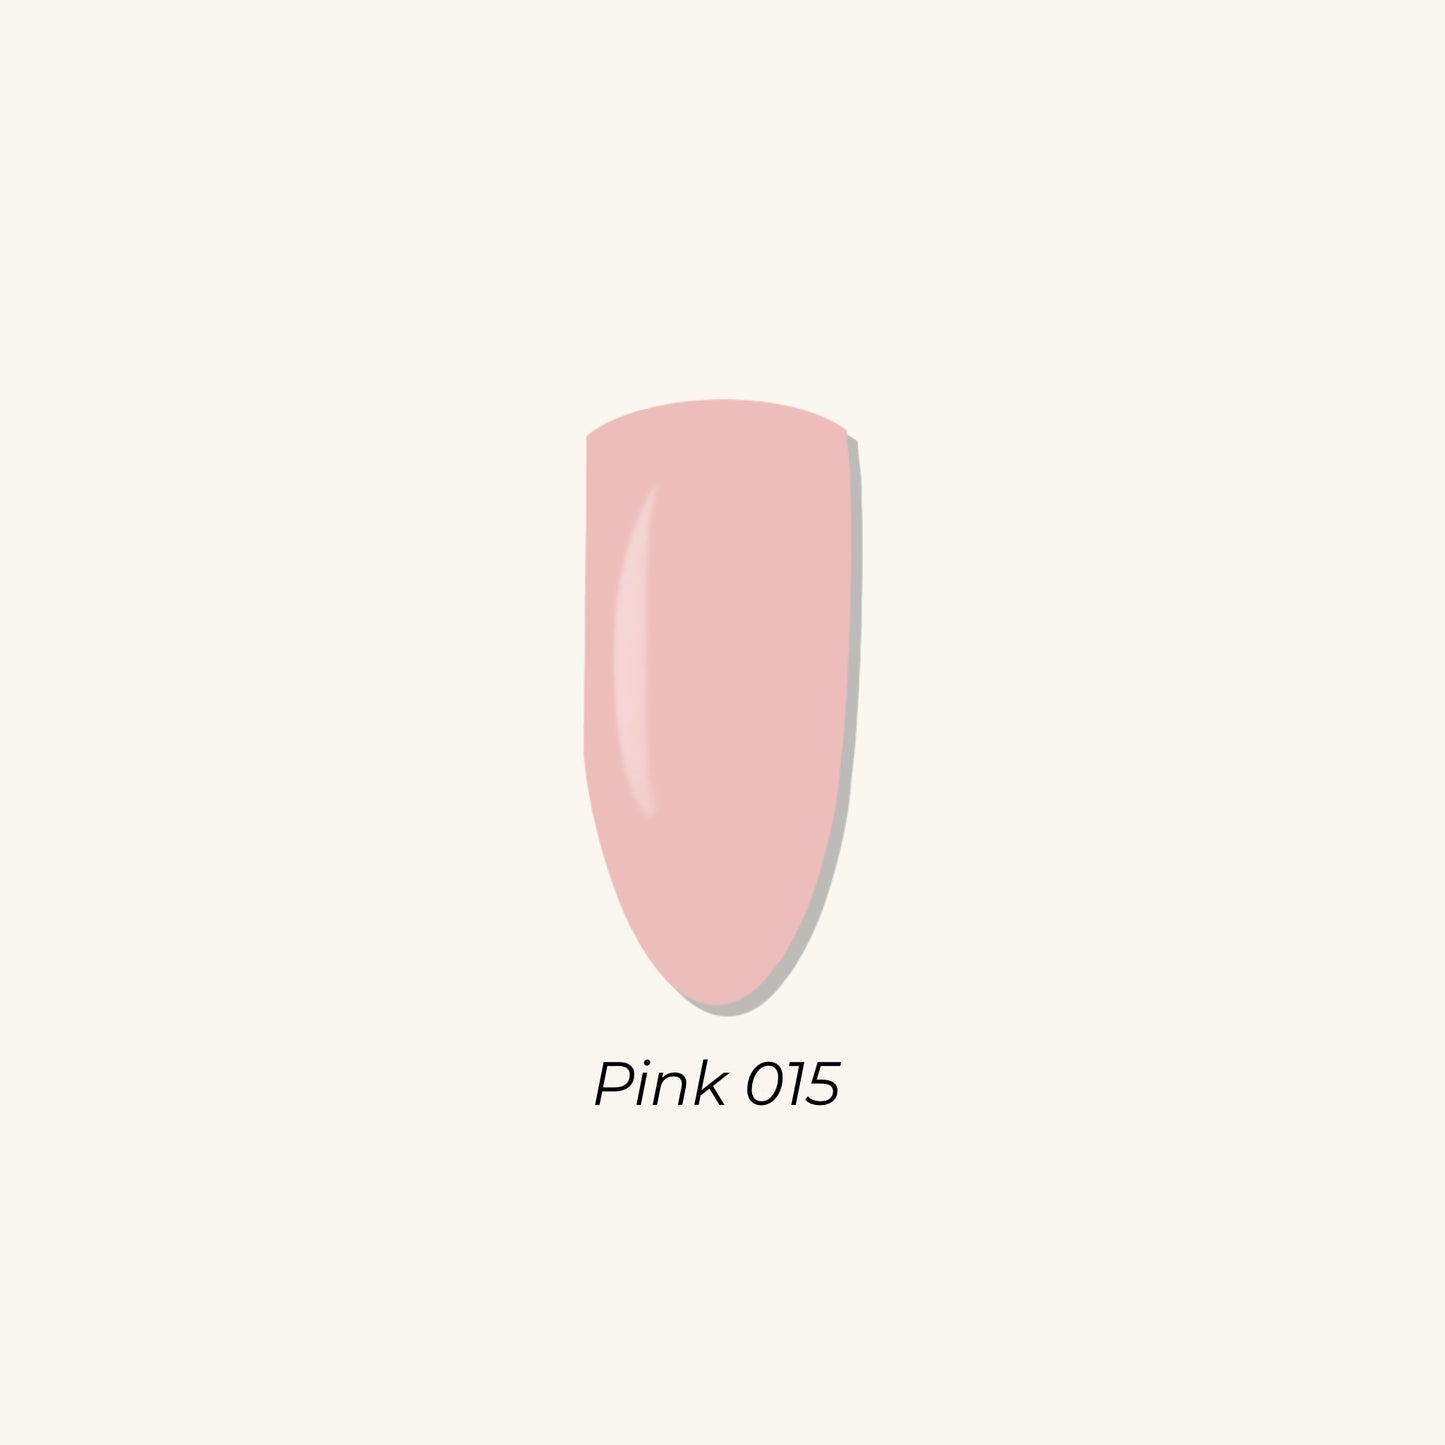 Pink 015